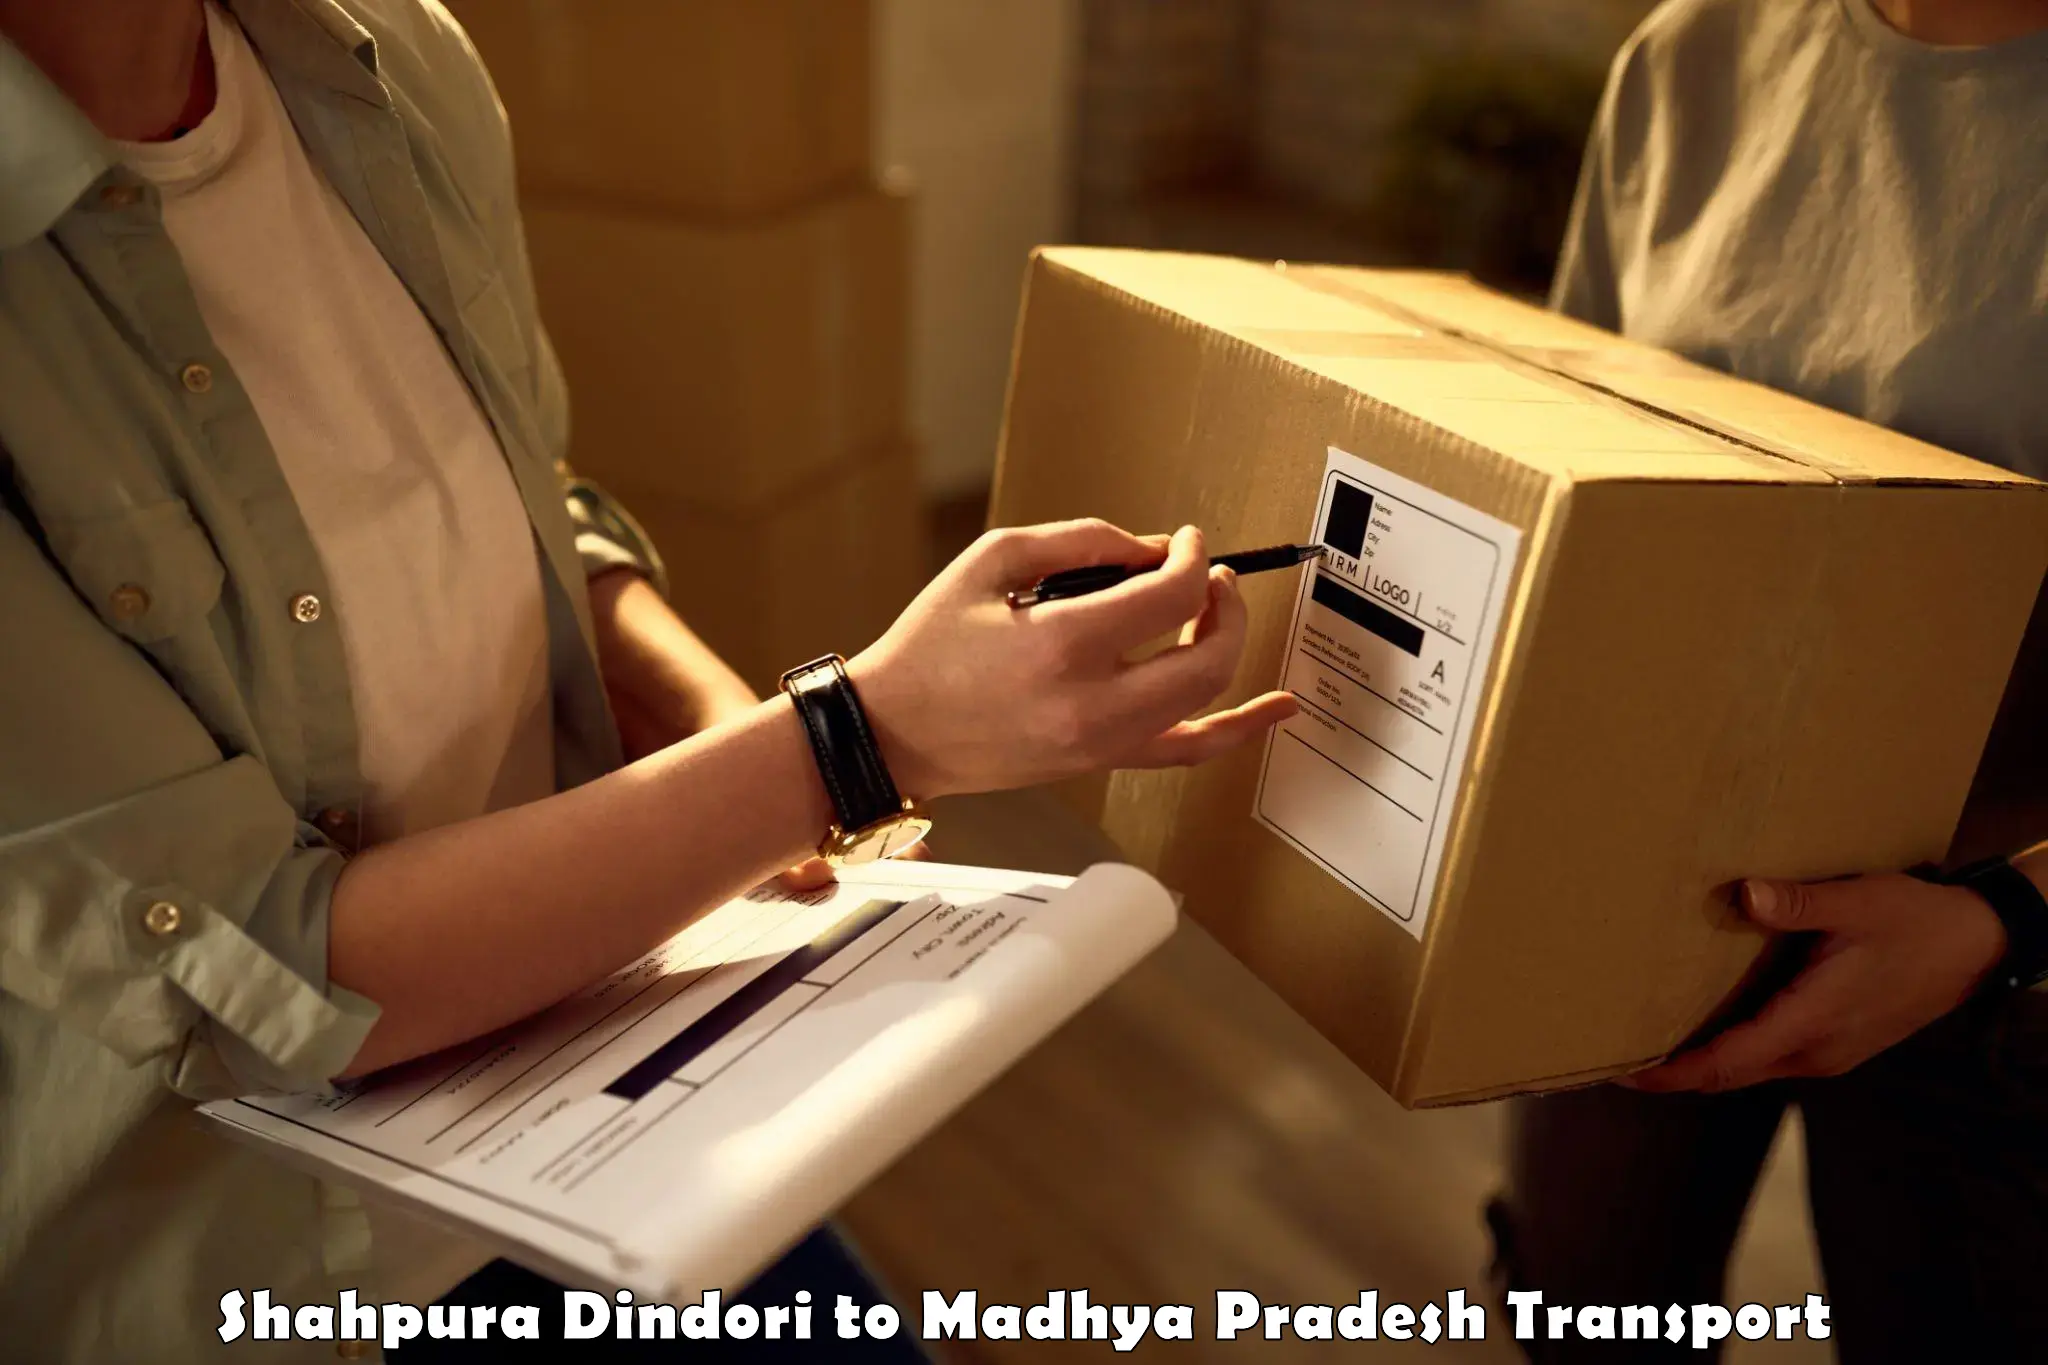 Delivery service Shahpura Dindori to Maheshwar